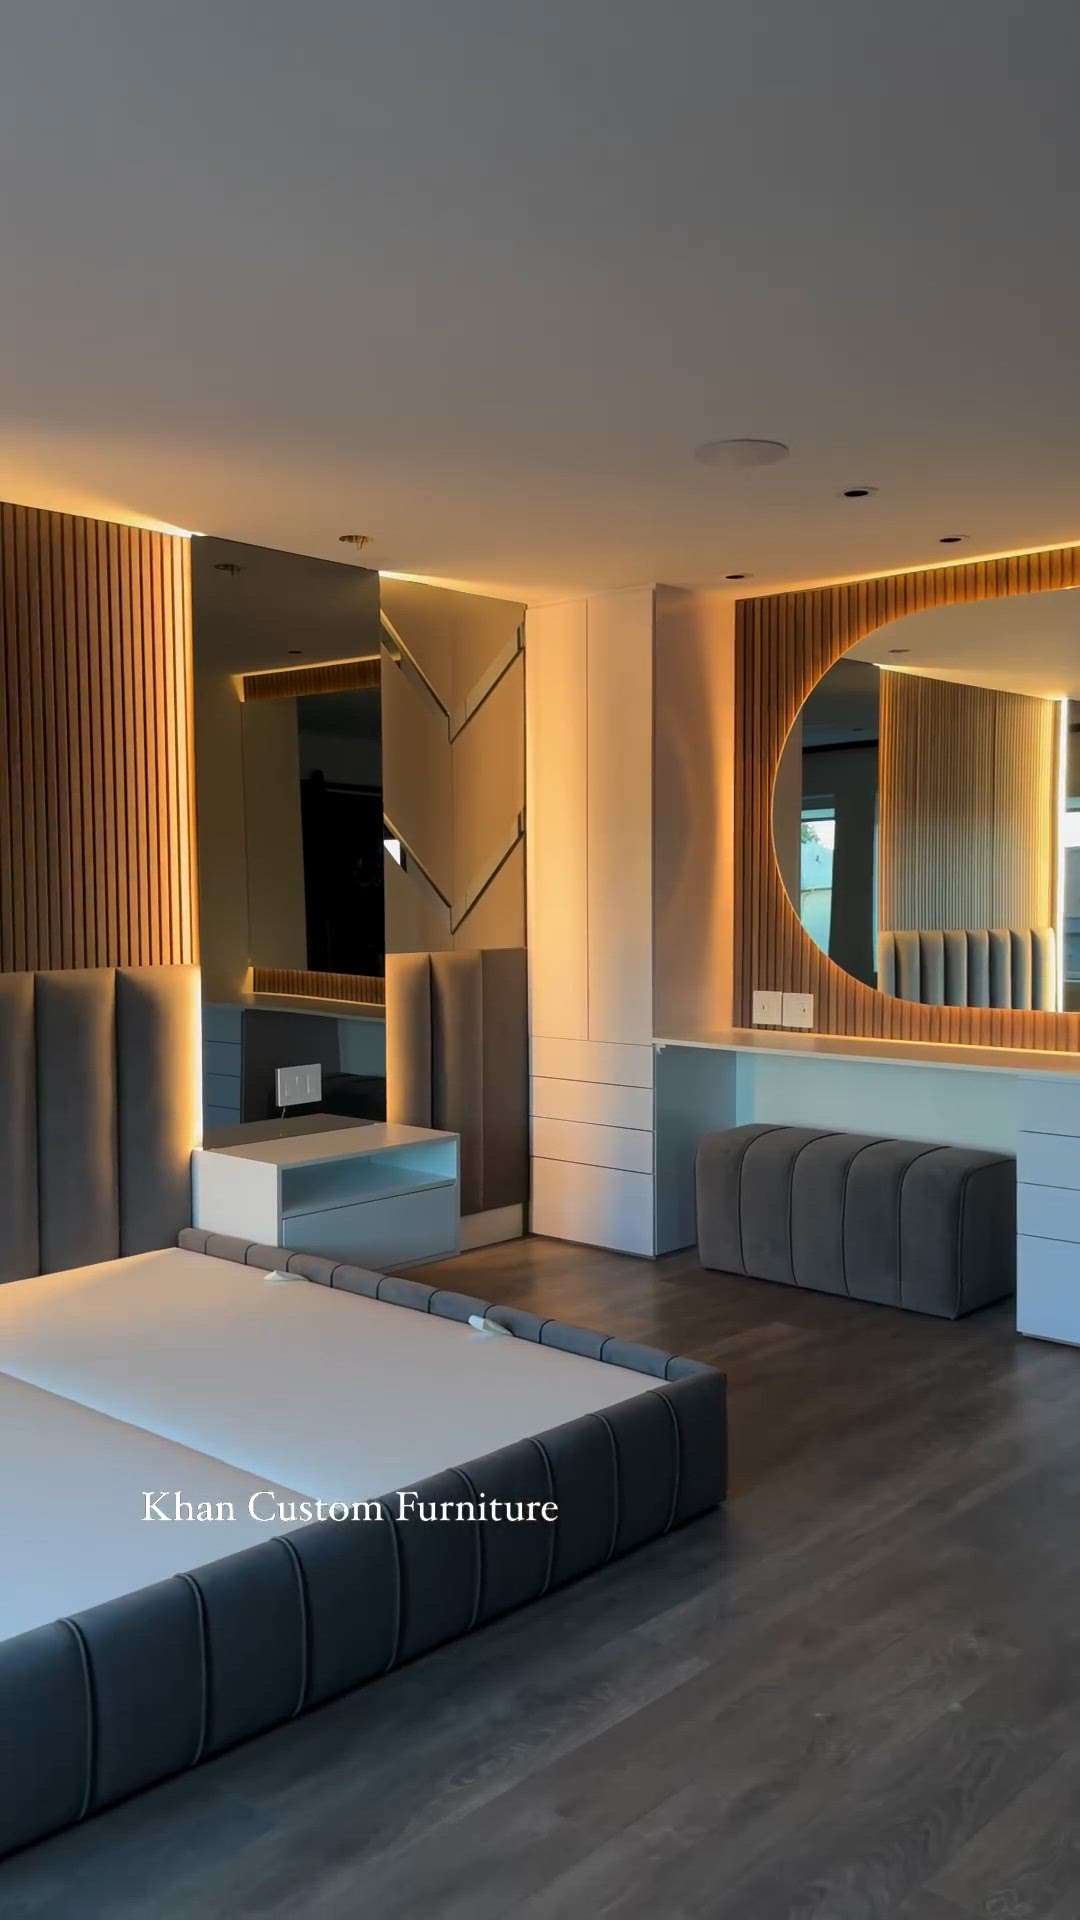 #BedroomDecor  #LUXURY_INTERIOR  #LUXURY_BED  #luxurybedroom  #luxurysofa  #LUXURY_INTERIOR  #Architectural&Interior  #homrdesign  #homeinteriors  #InteriorDesigner  #HomeDecor  #we will decorate your home